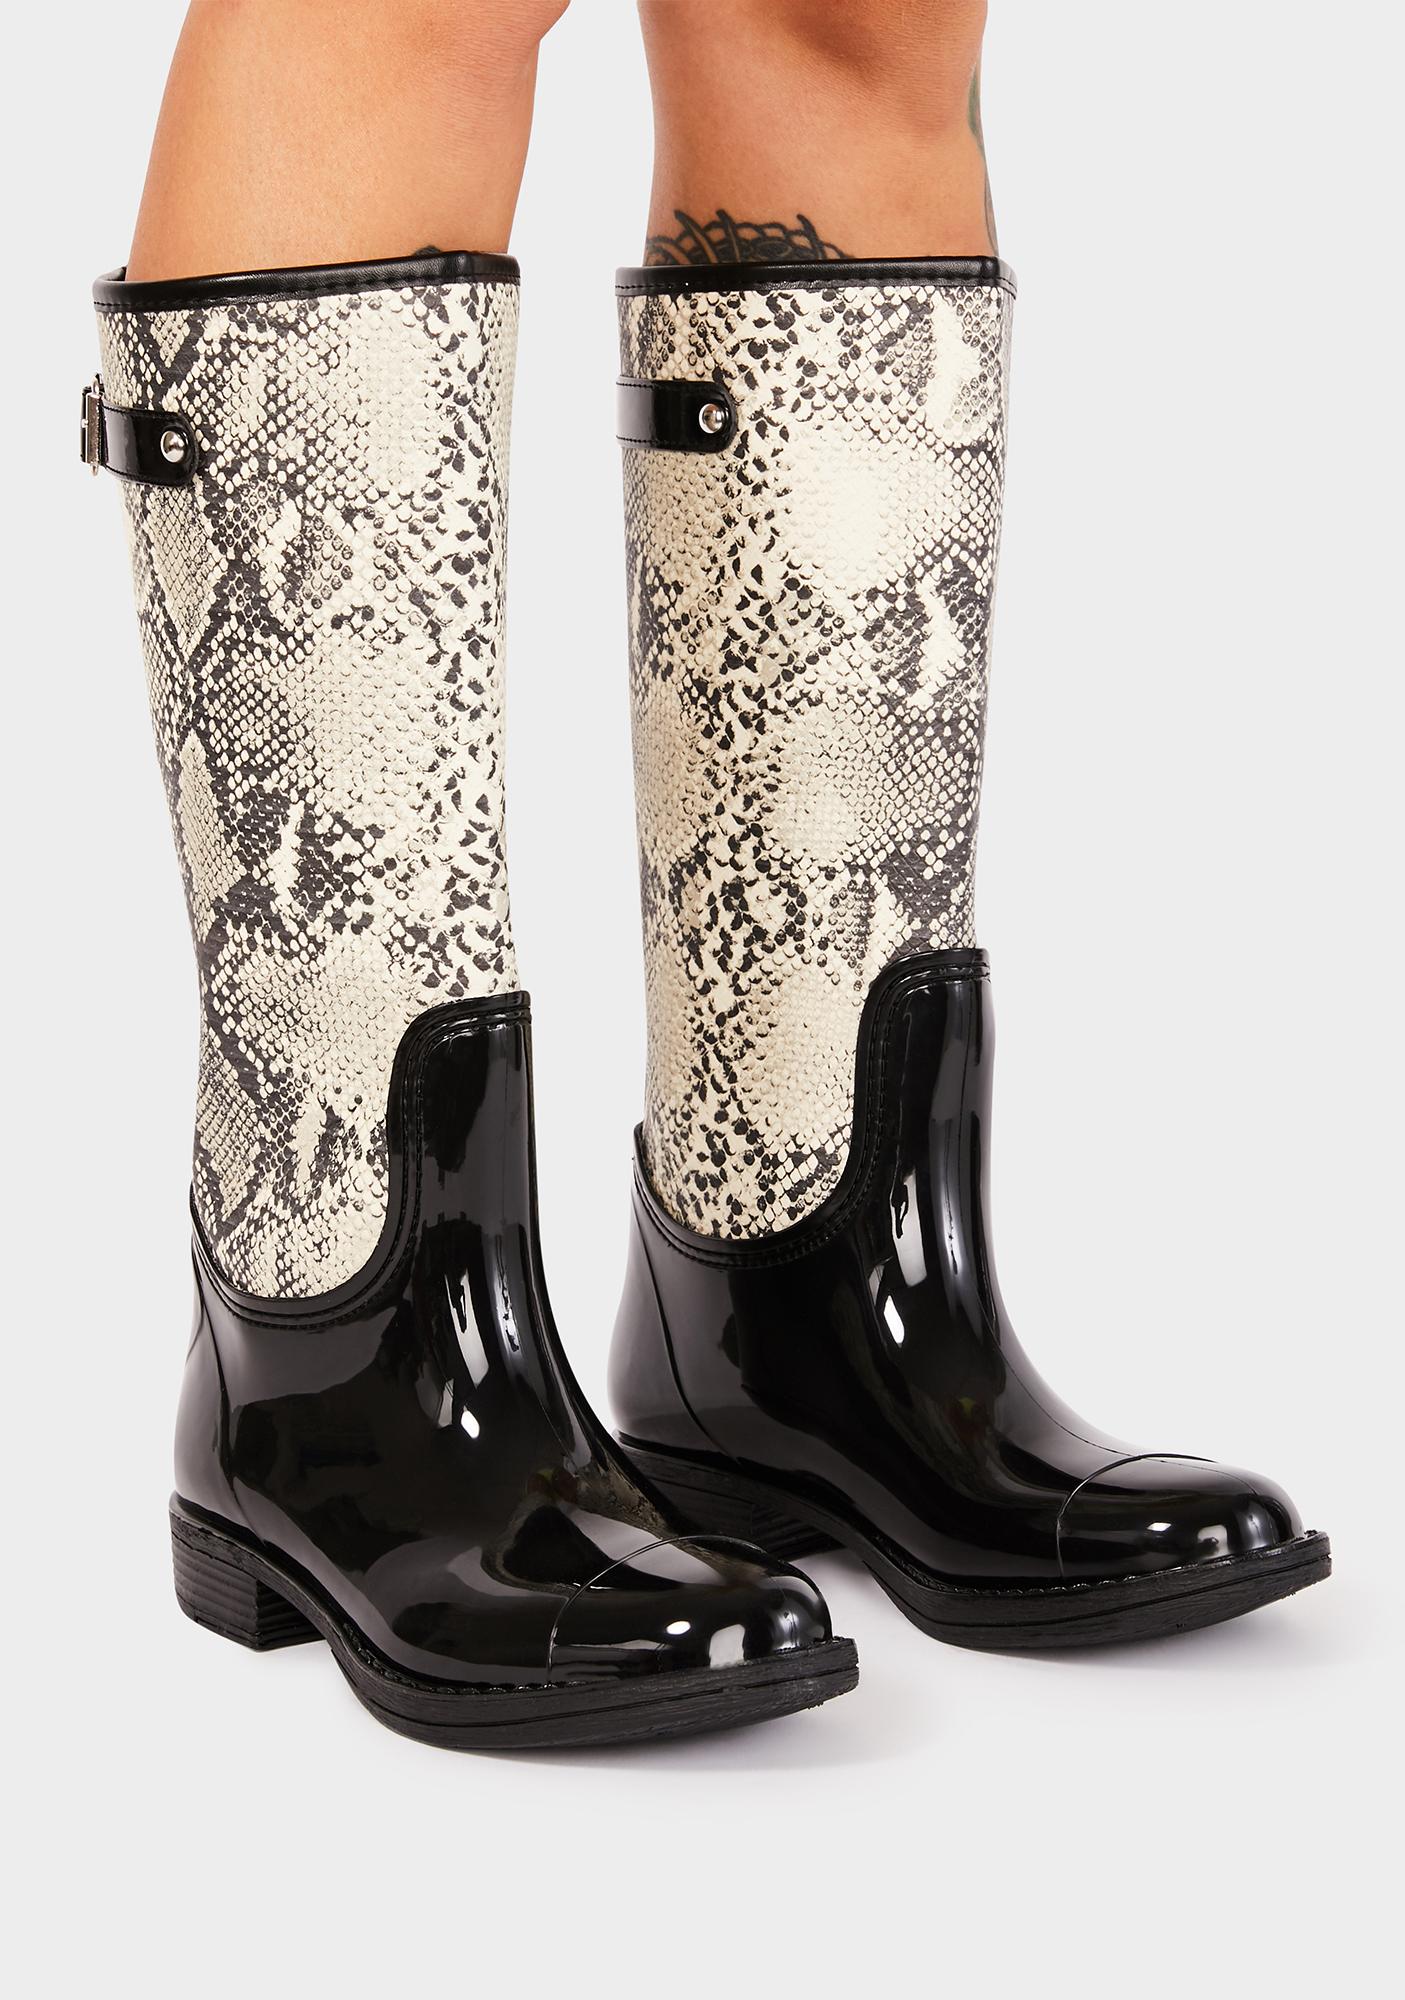 Snakeskin Knee High Rain Boots - Black 